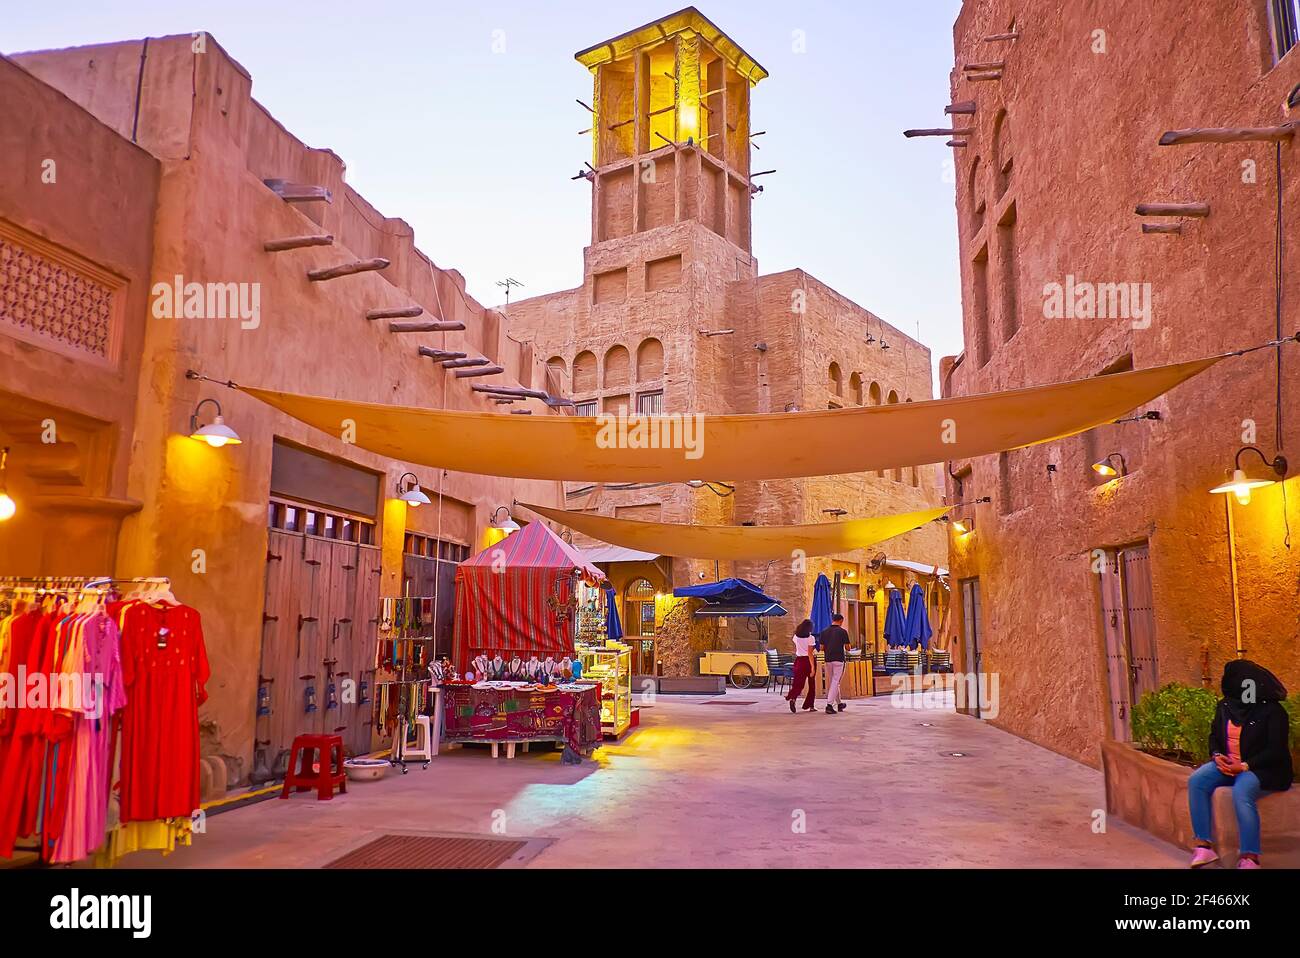 The scenic adobe street of Al Fahidi with small tourist market stalls, offering souvenirs, garment, traditional jewelries, Dubai, UAE Stock Photo